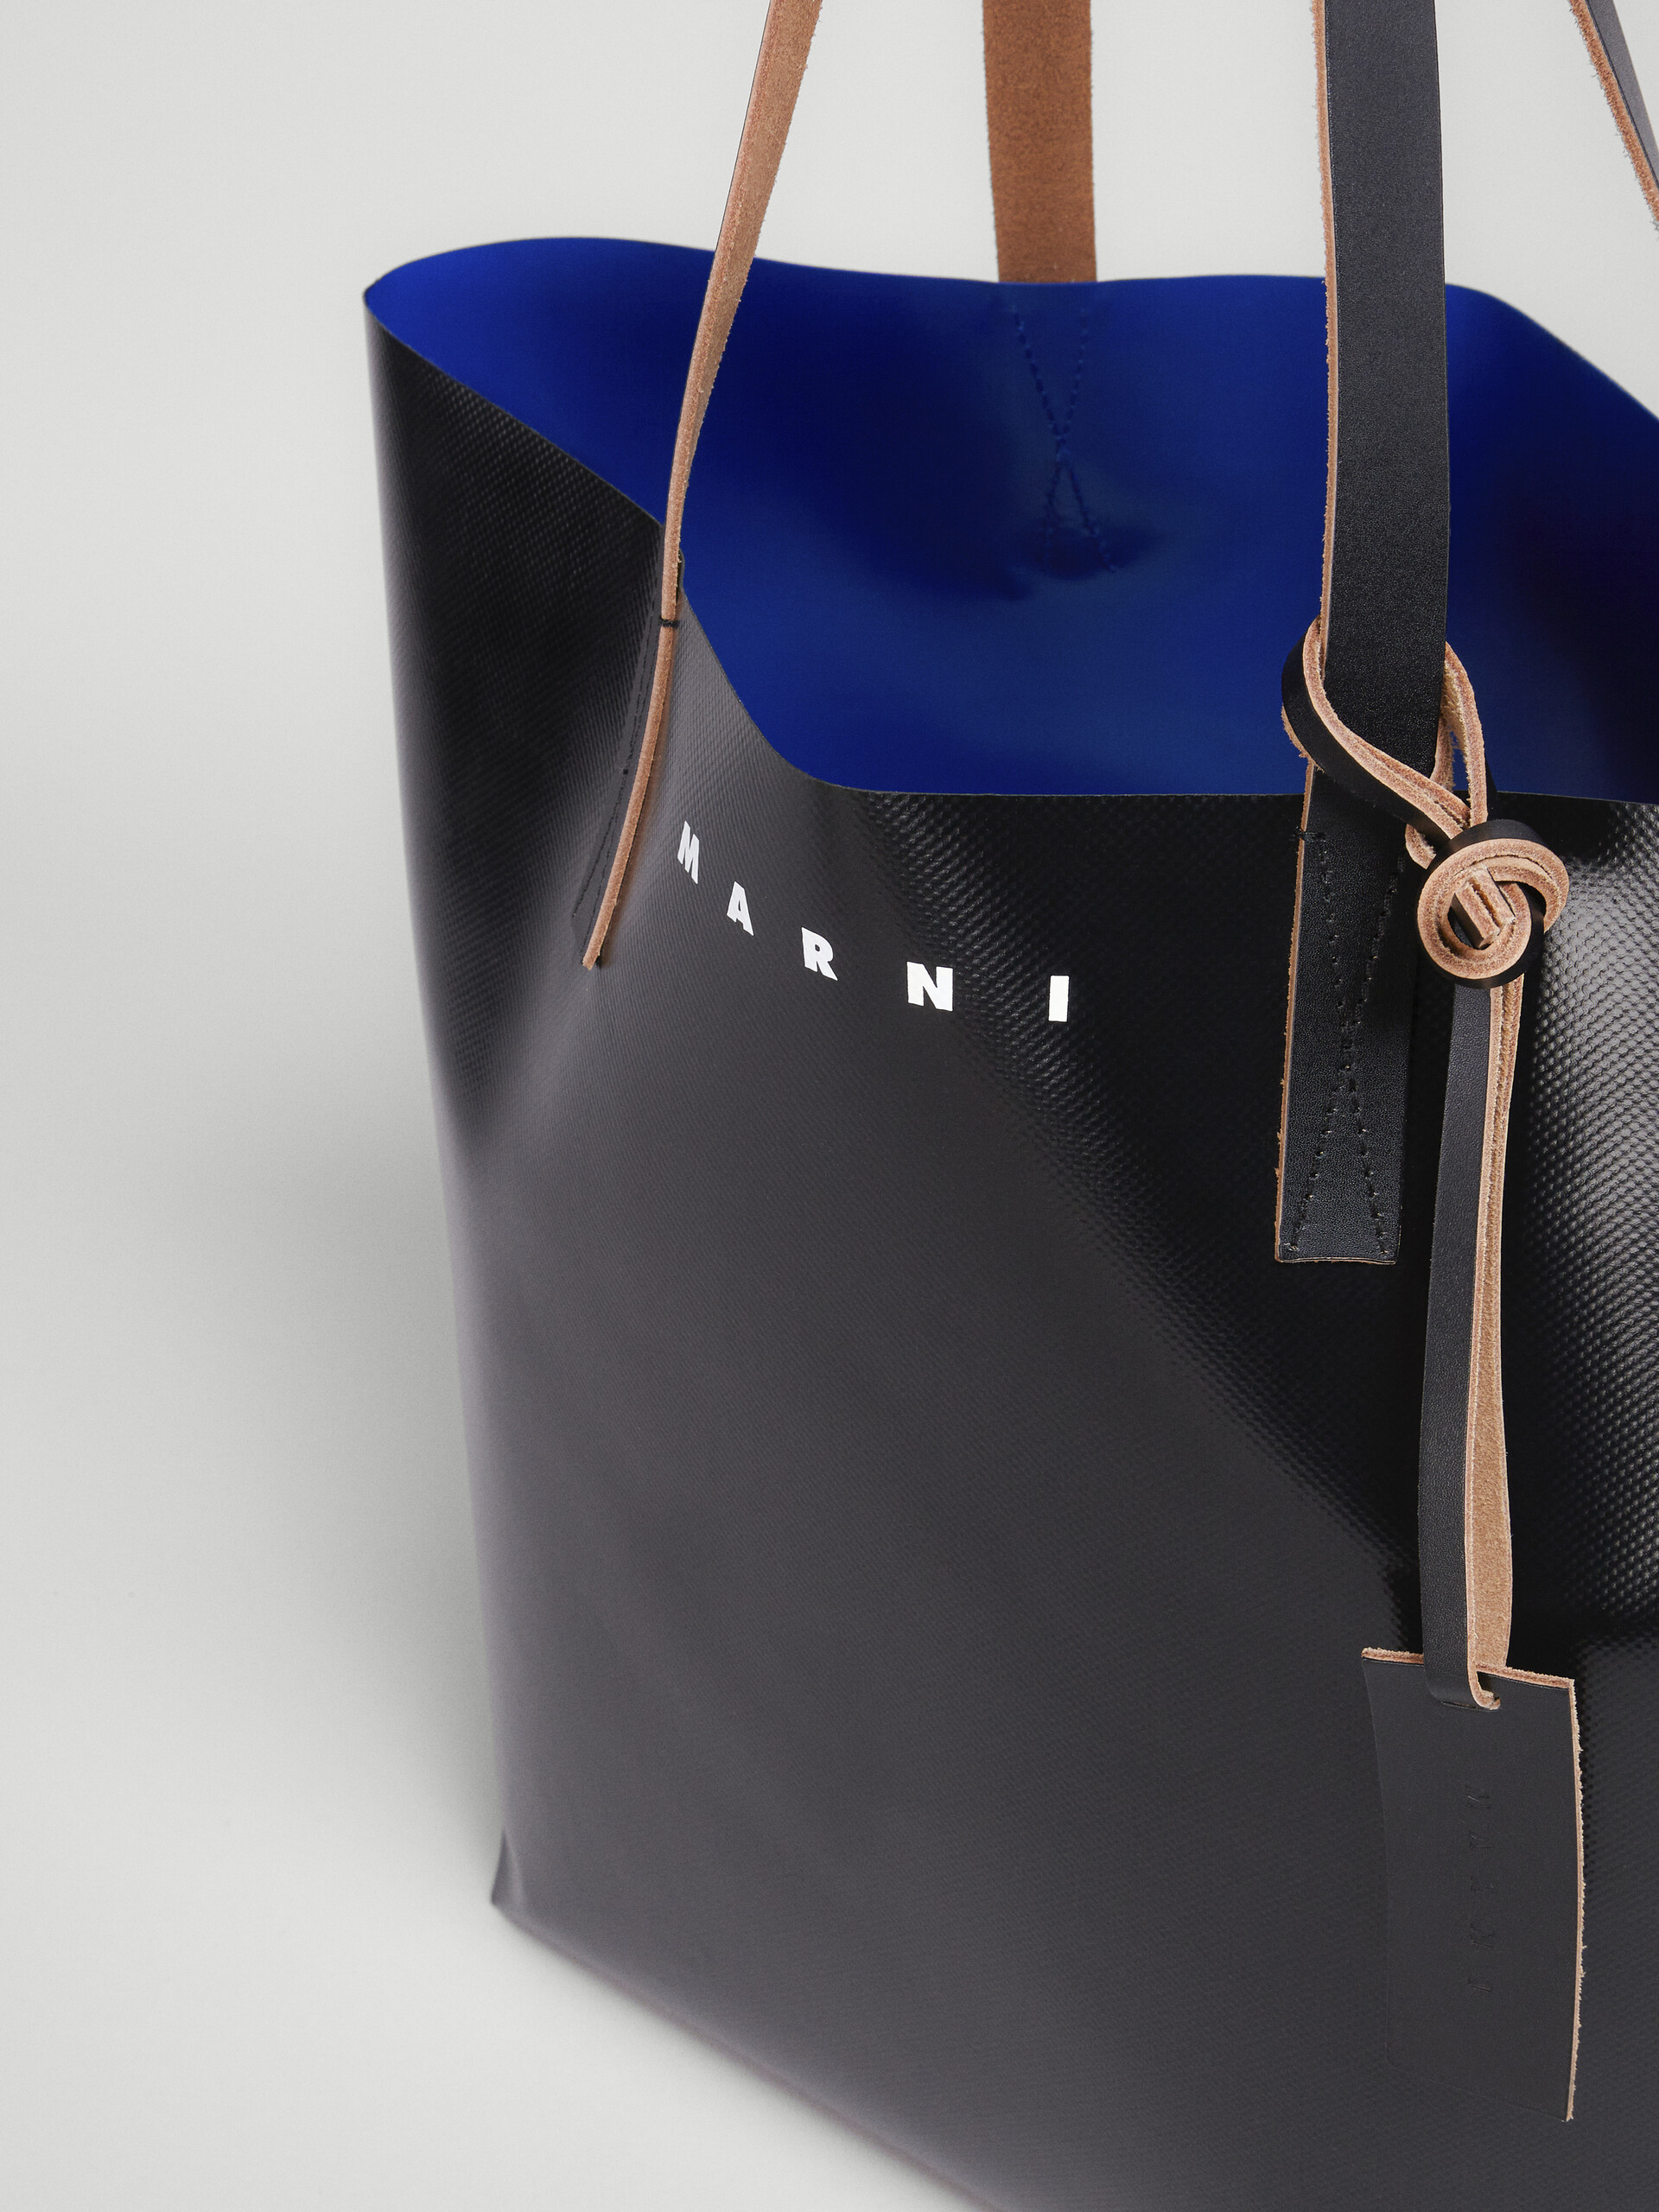 Black and blue TRIBECA PVC shopping bag - Shopping Bags - Image 5